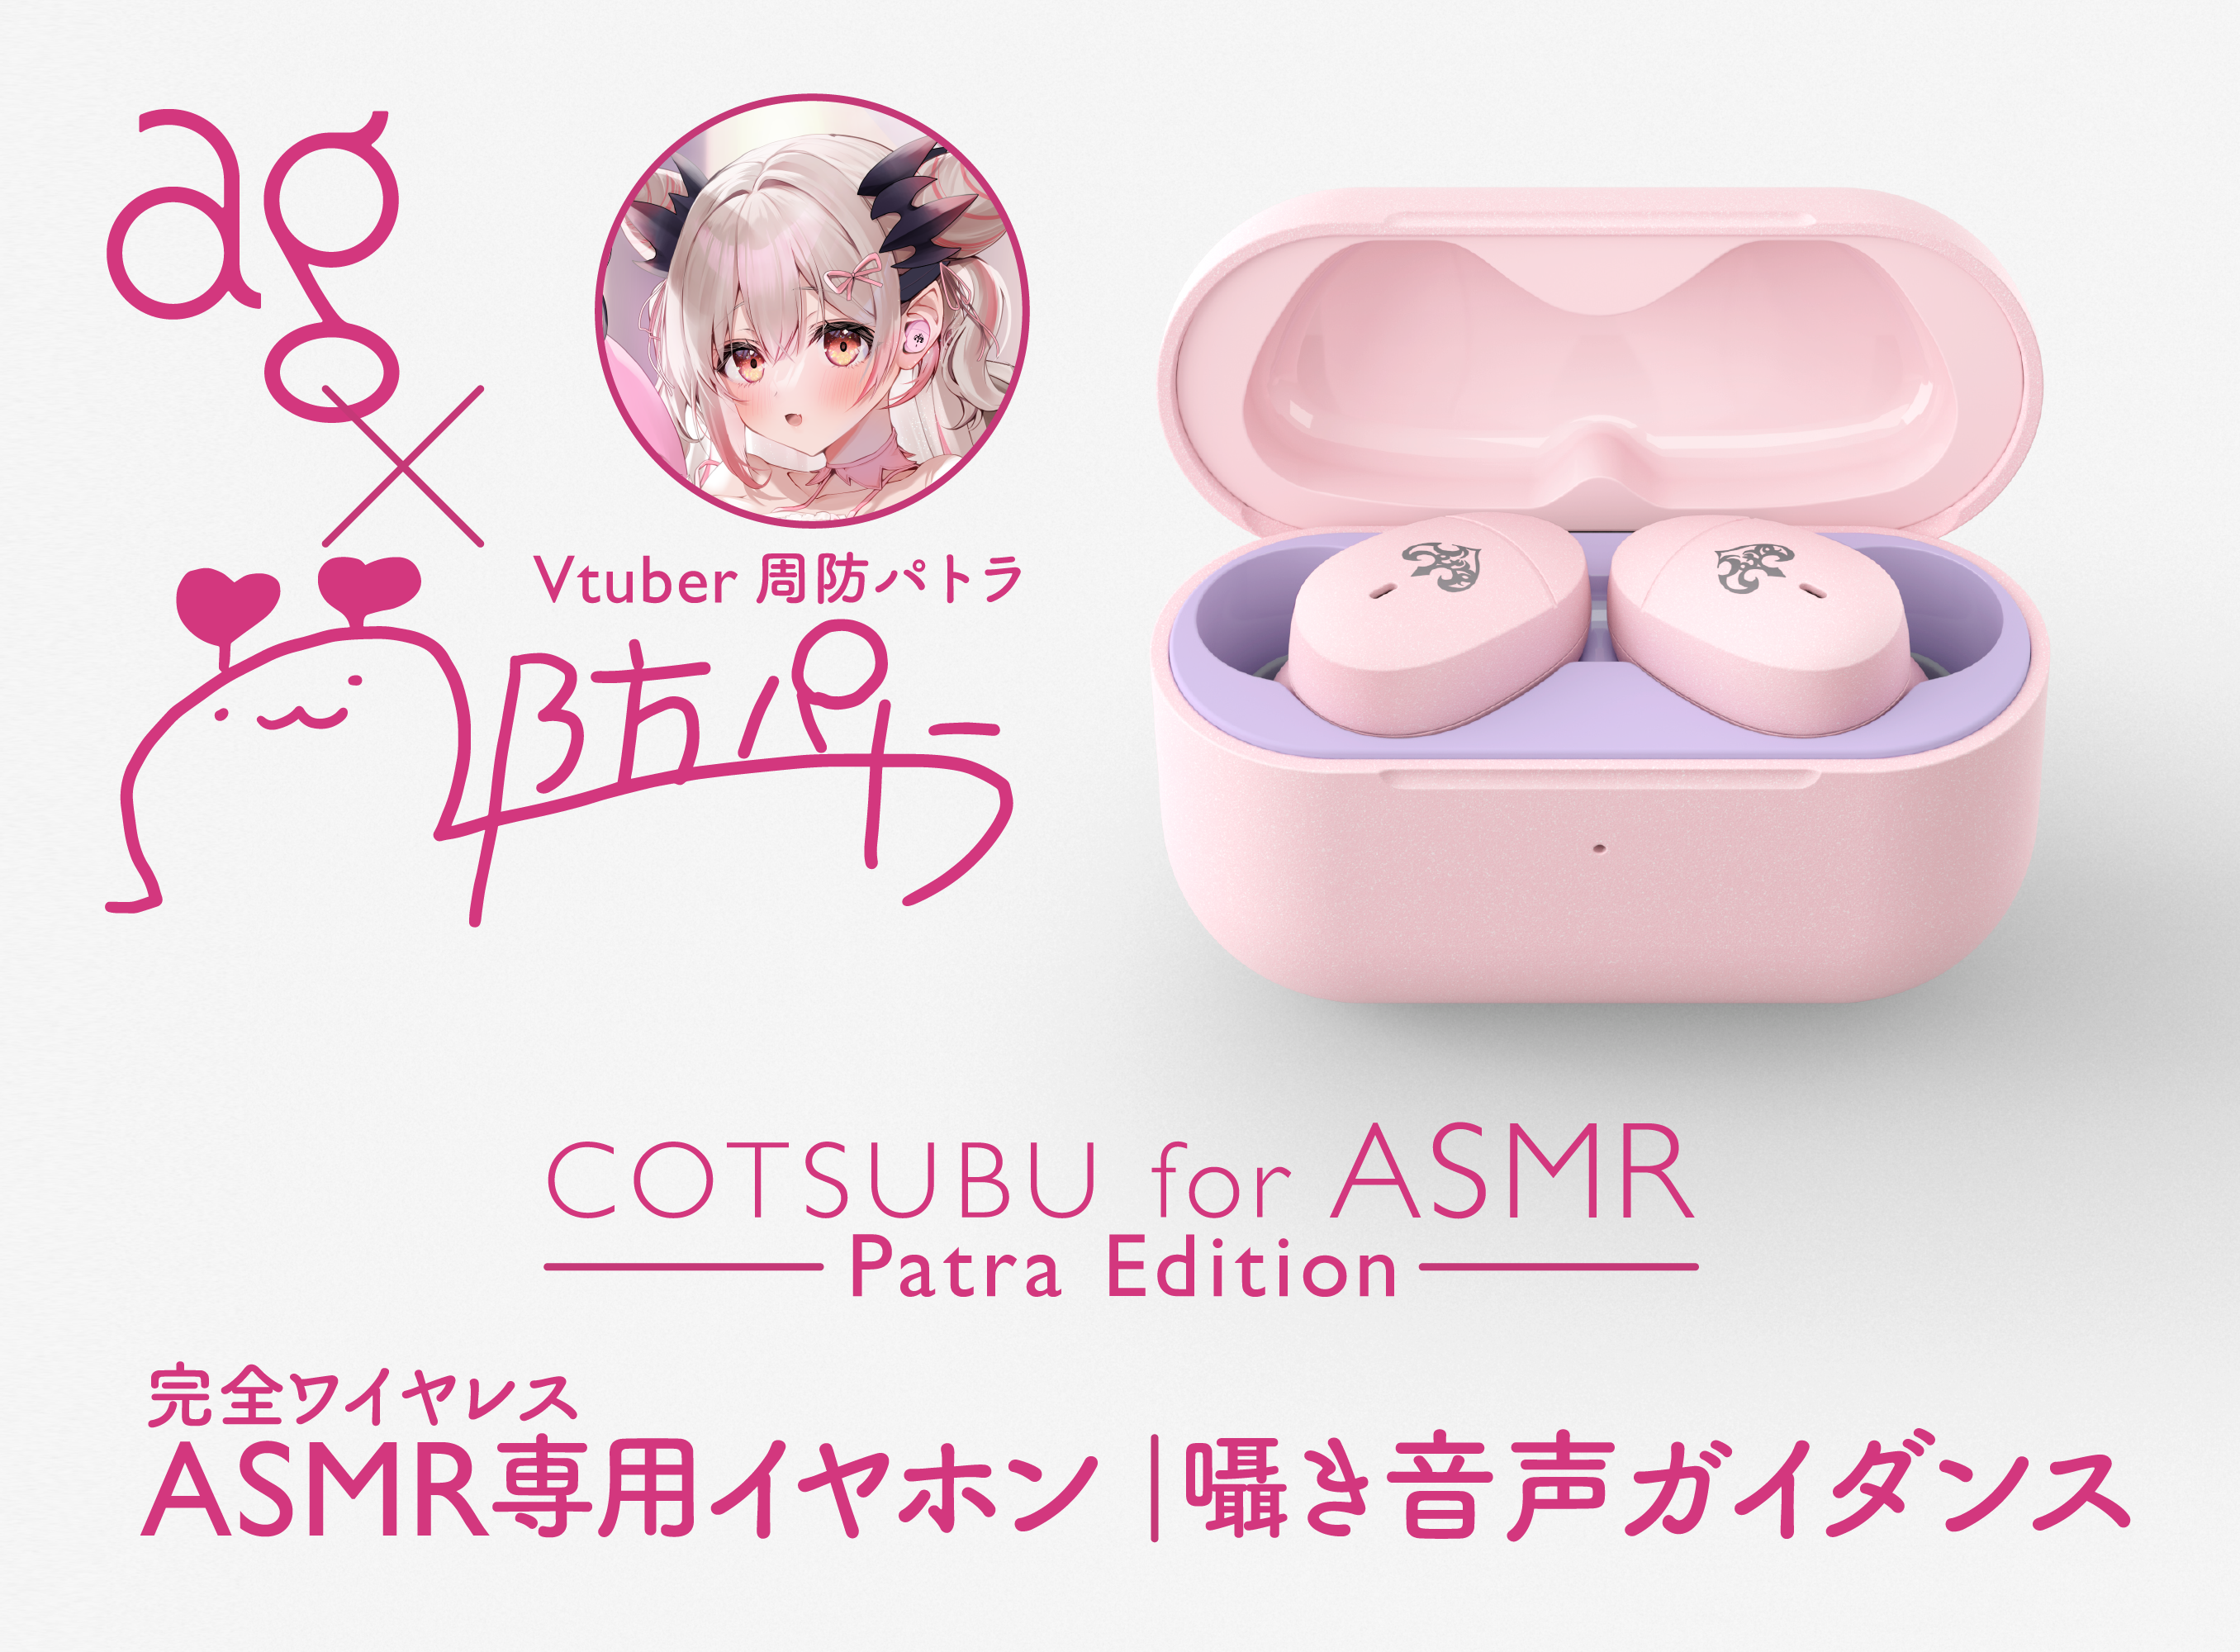 COTSUBU for ASMR Patra Edition 周防パトラ コラボ - イヤホン